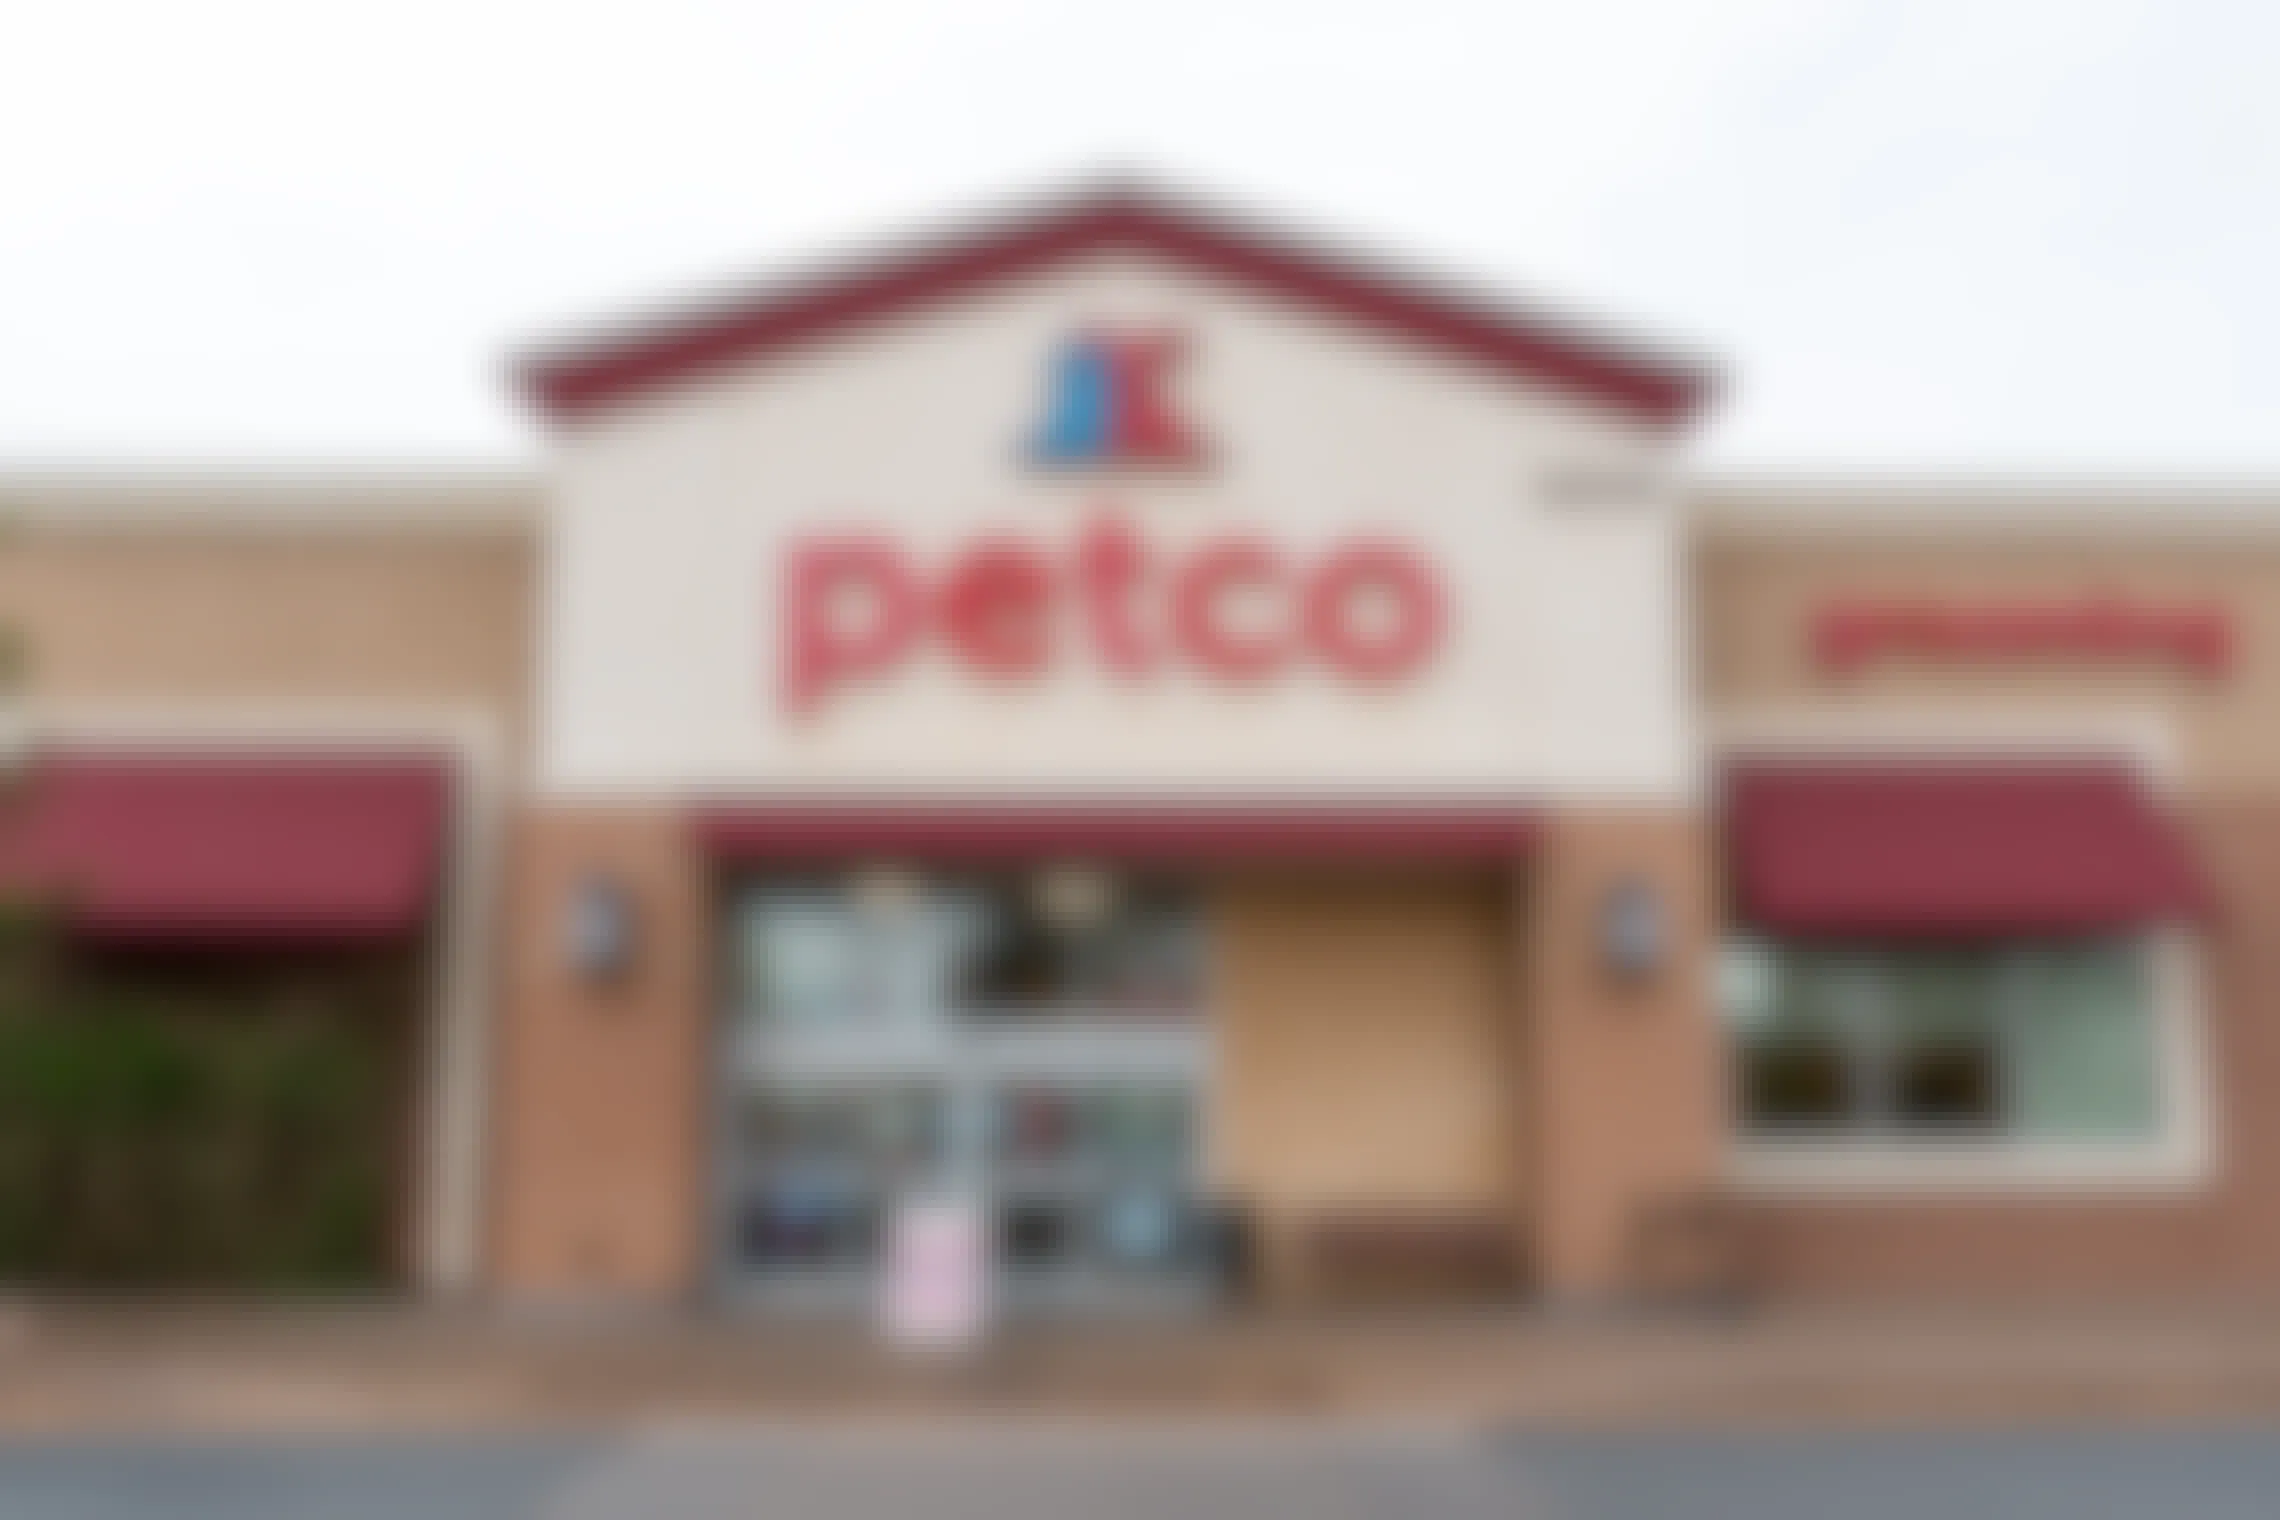 Petco store front